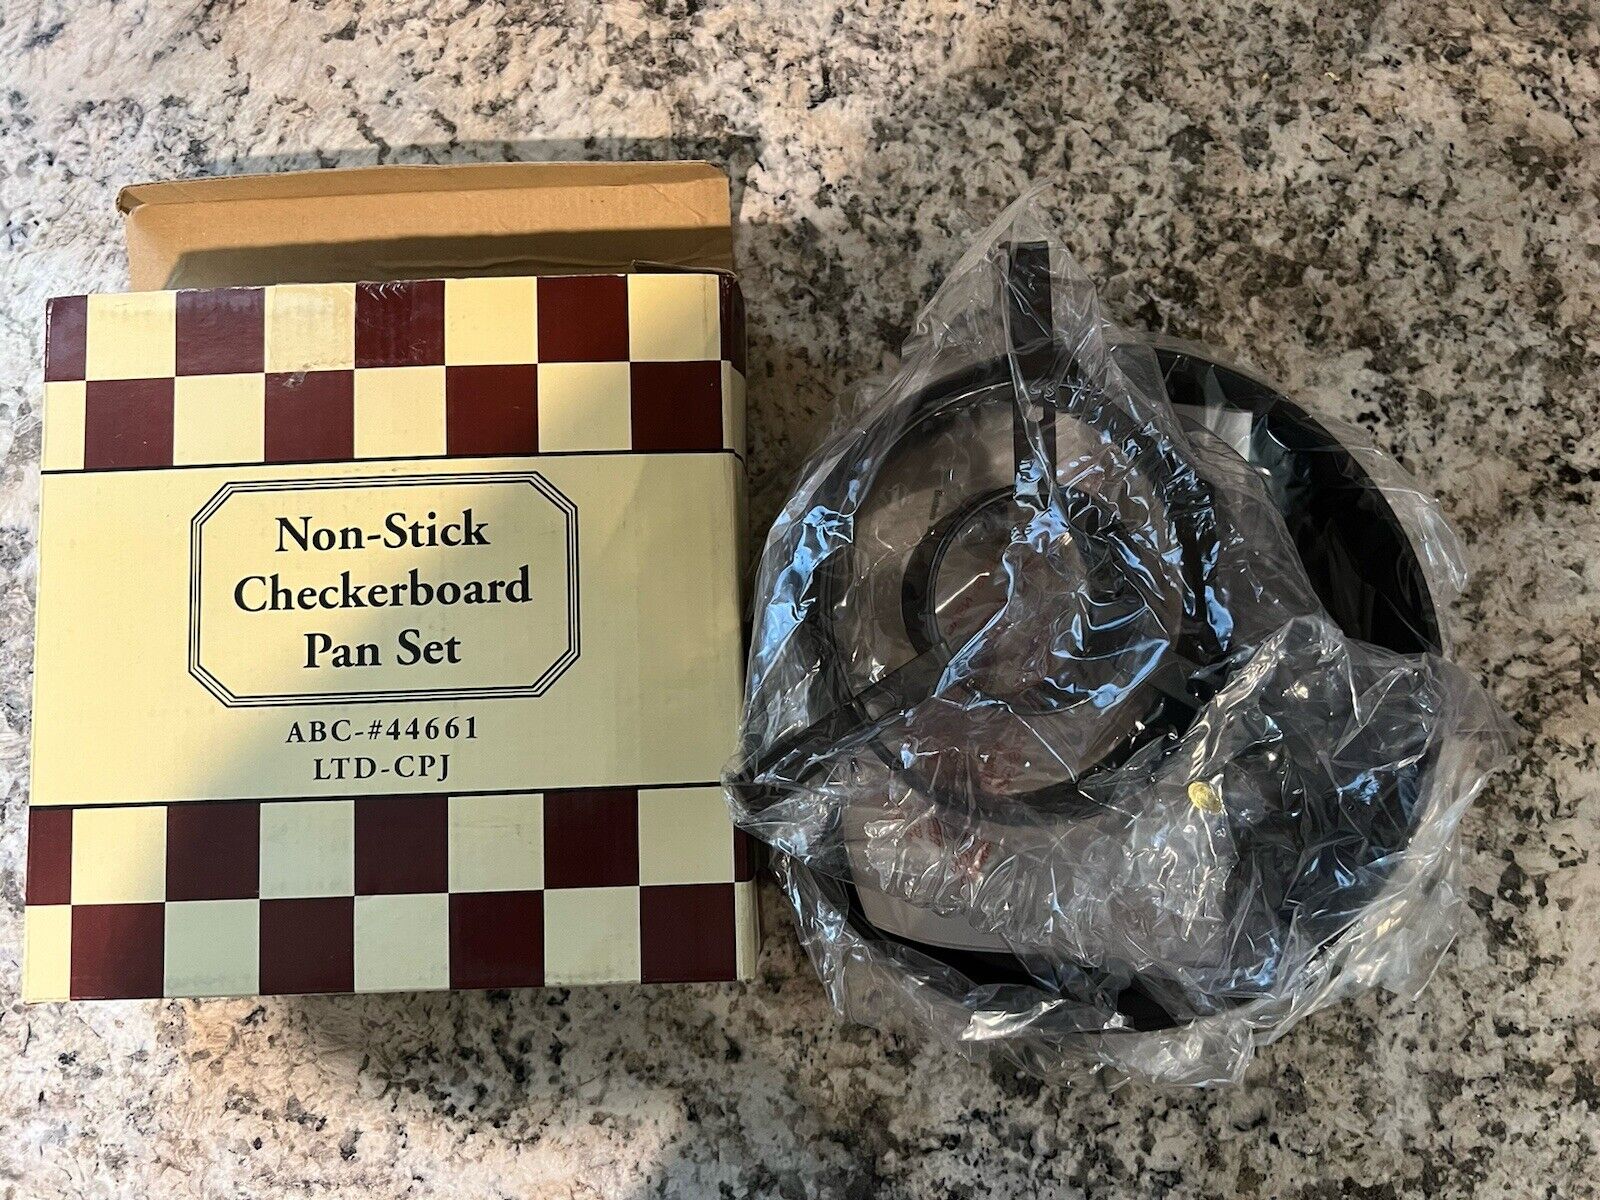 CHECKERBOARD CAKE PAN SET Non-Stick ABC New SEE PHOTOS #44661 LTD